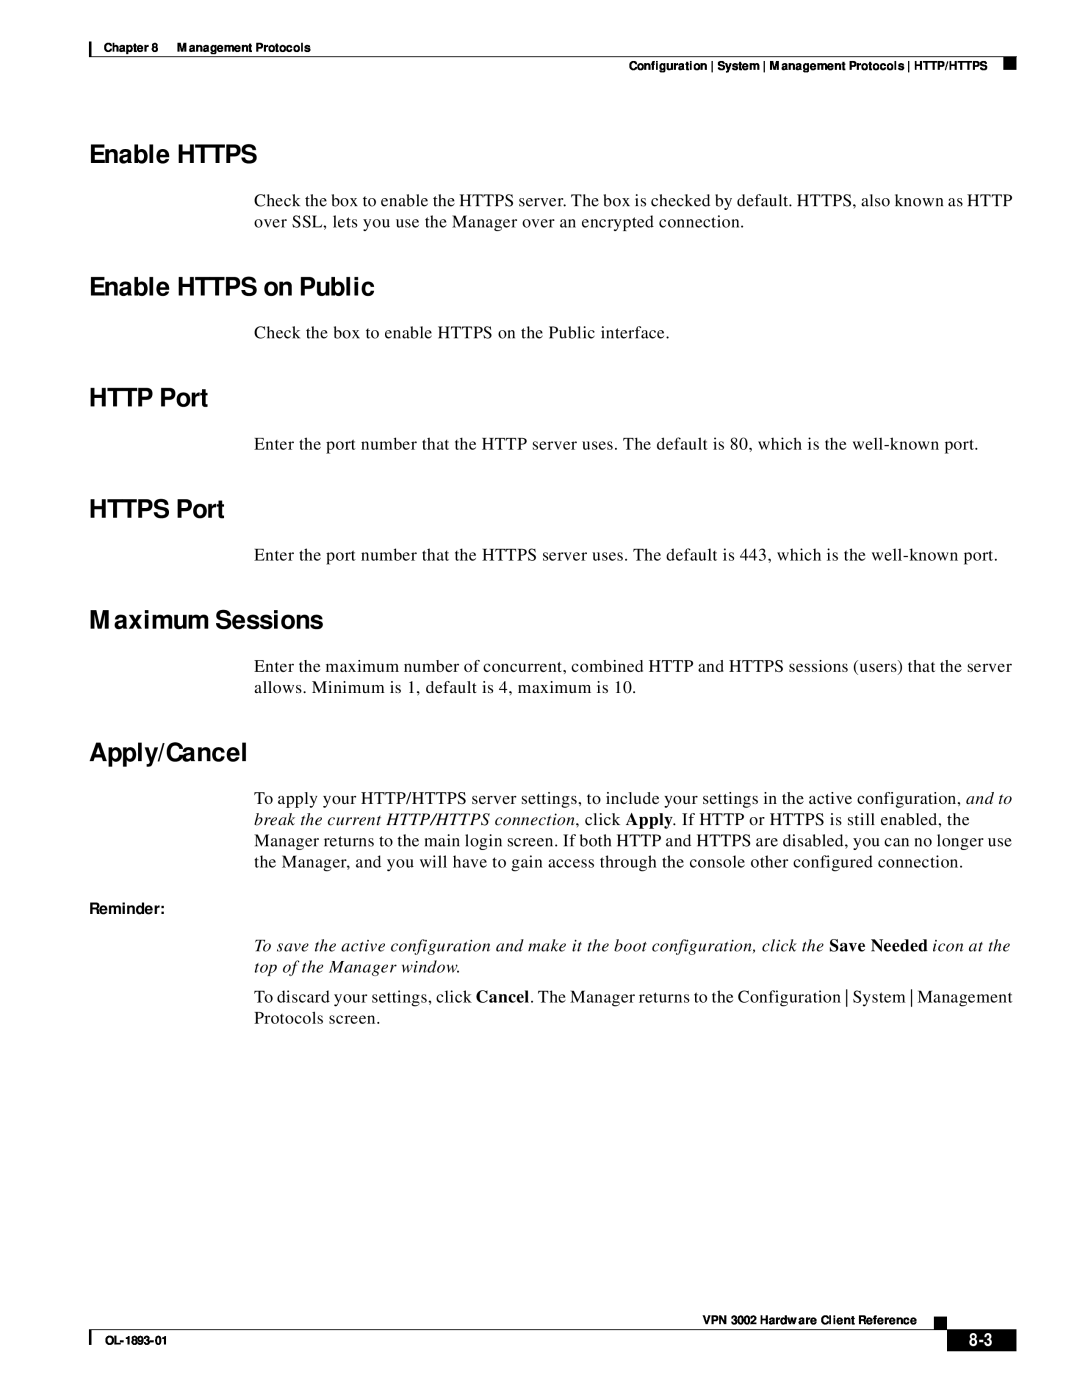 Cisco Systems VPN 3002 manual Enable HTTPS on Public, HTTP Port, HTTPS Port, Maximum Sessions, Apply/Cancel, Reminder 